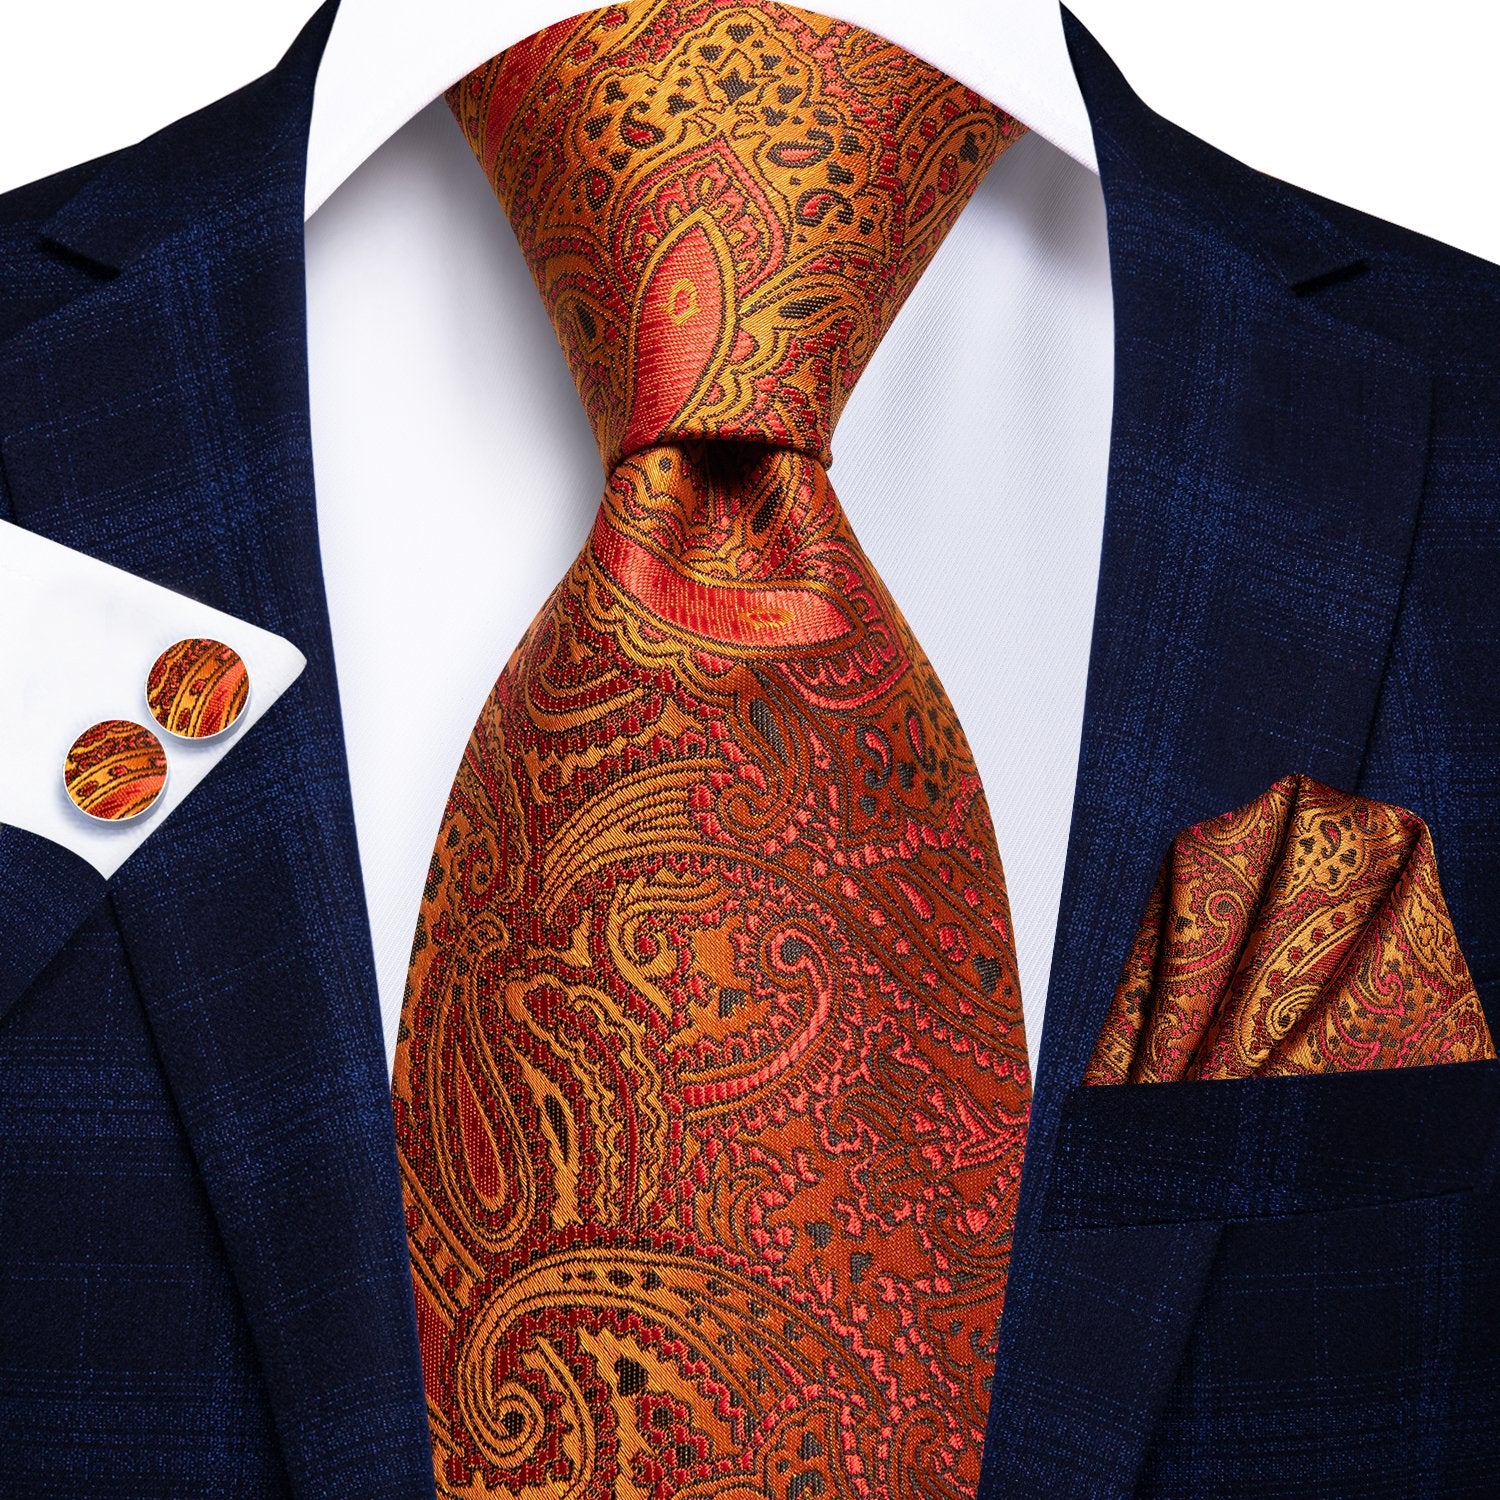 Orange Paisley Tie Handkerchief Cufflinks Set with Wedding Brooch